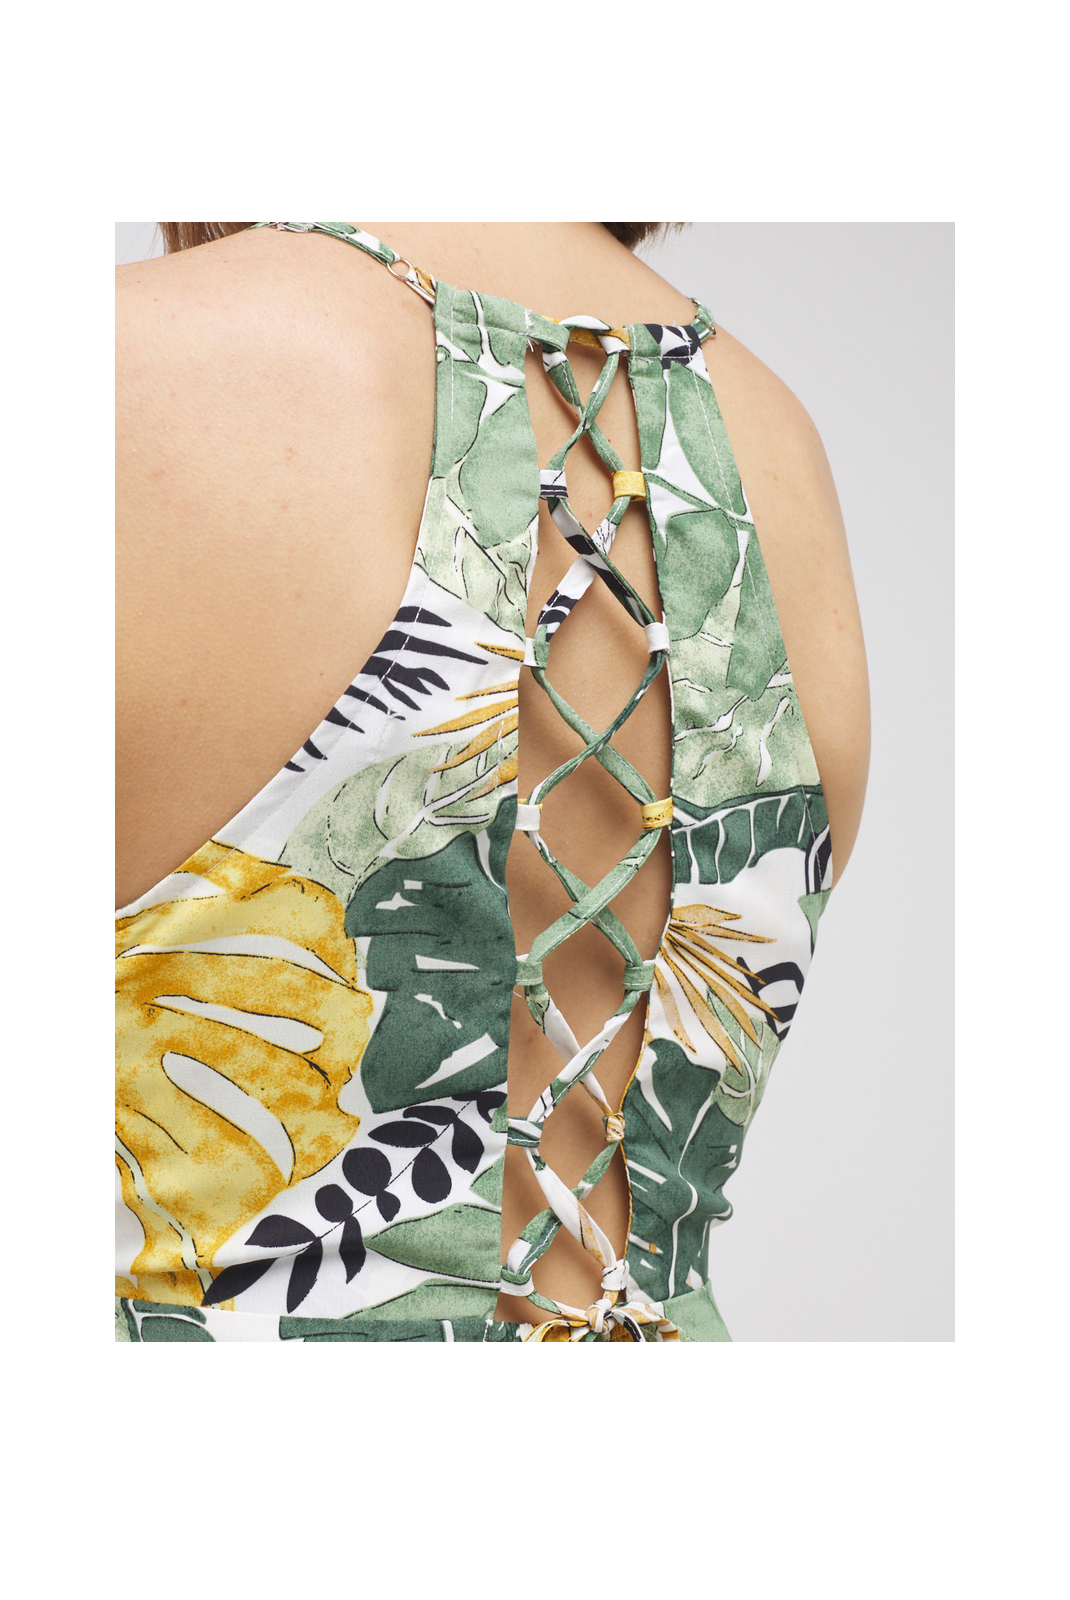 Molly Bracken Robe Verte Longue Imprimes Tropical La70be20 